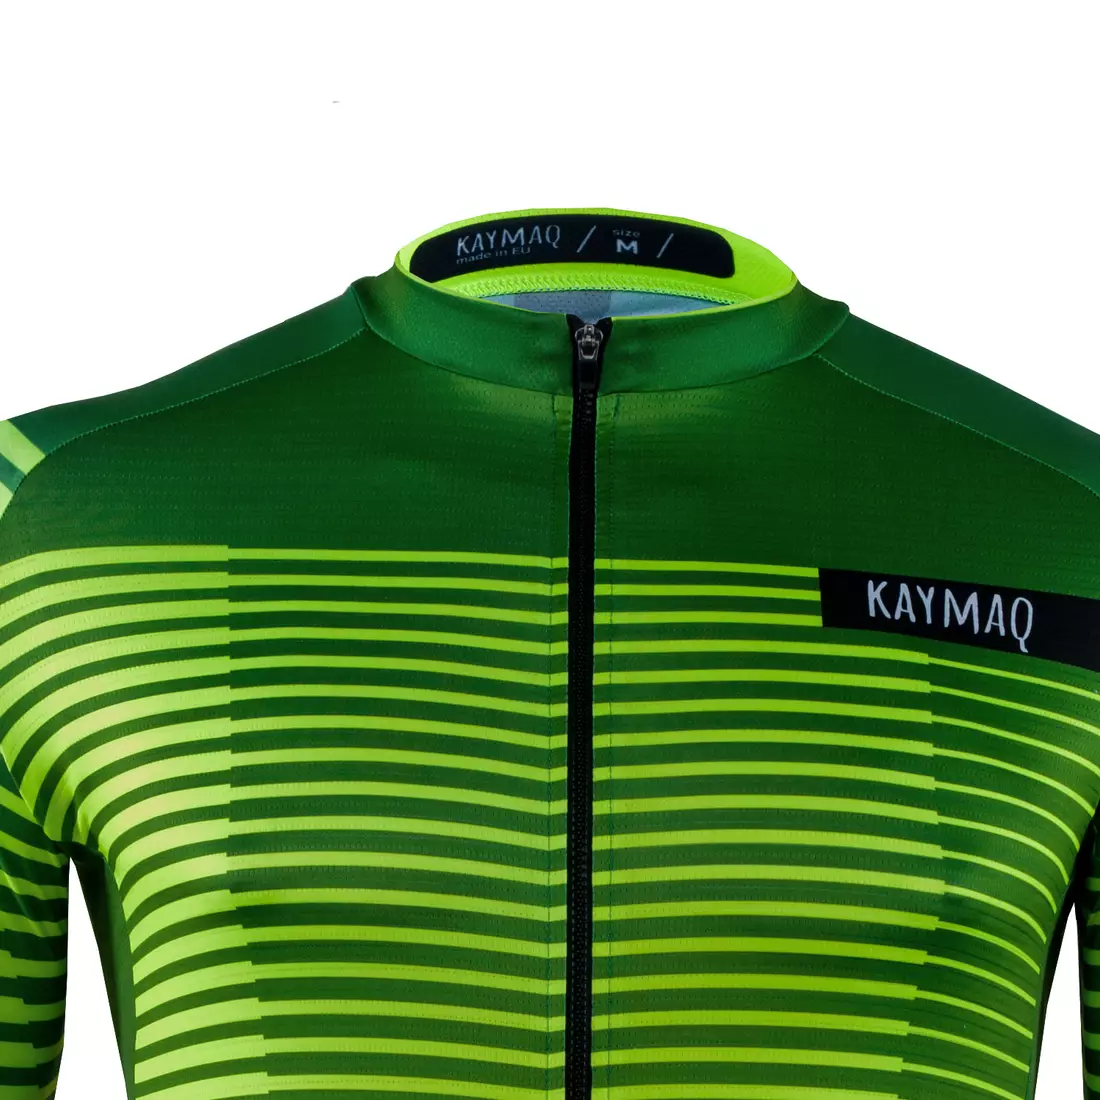 KAYMAQ M66 RACE pánsky cyklistický dres s krátkym rukávom, zelená